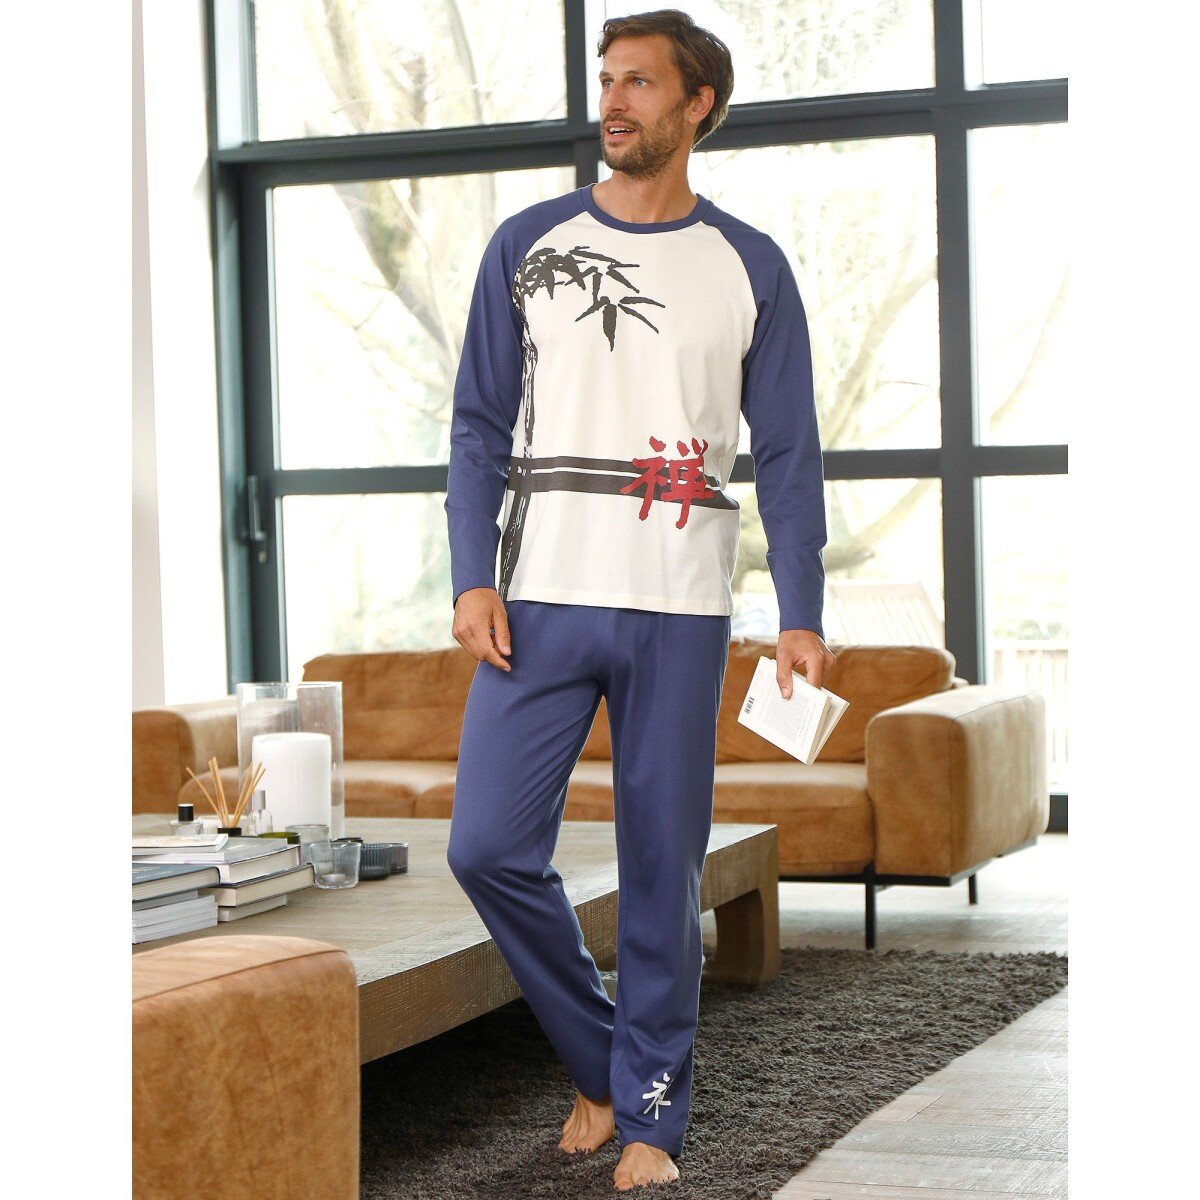 Blancheporte Pánské pyžamo s dlouhými rukávy, motiv bambusu režnáindigo 97106 (L)